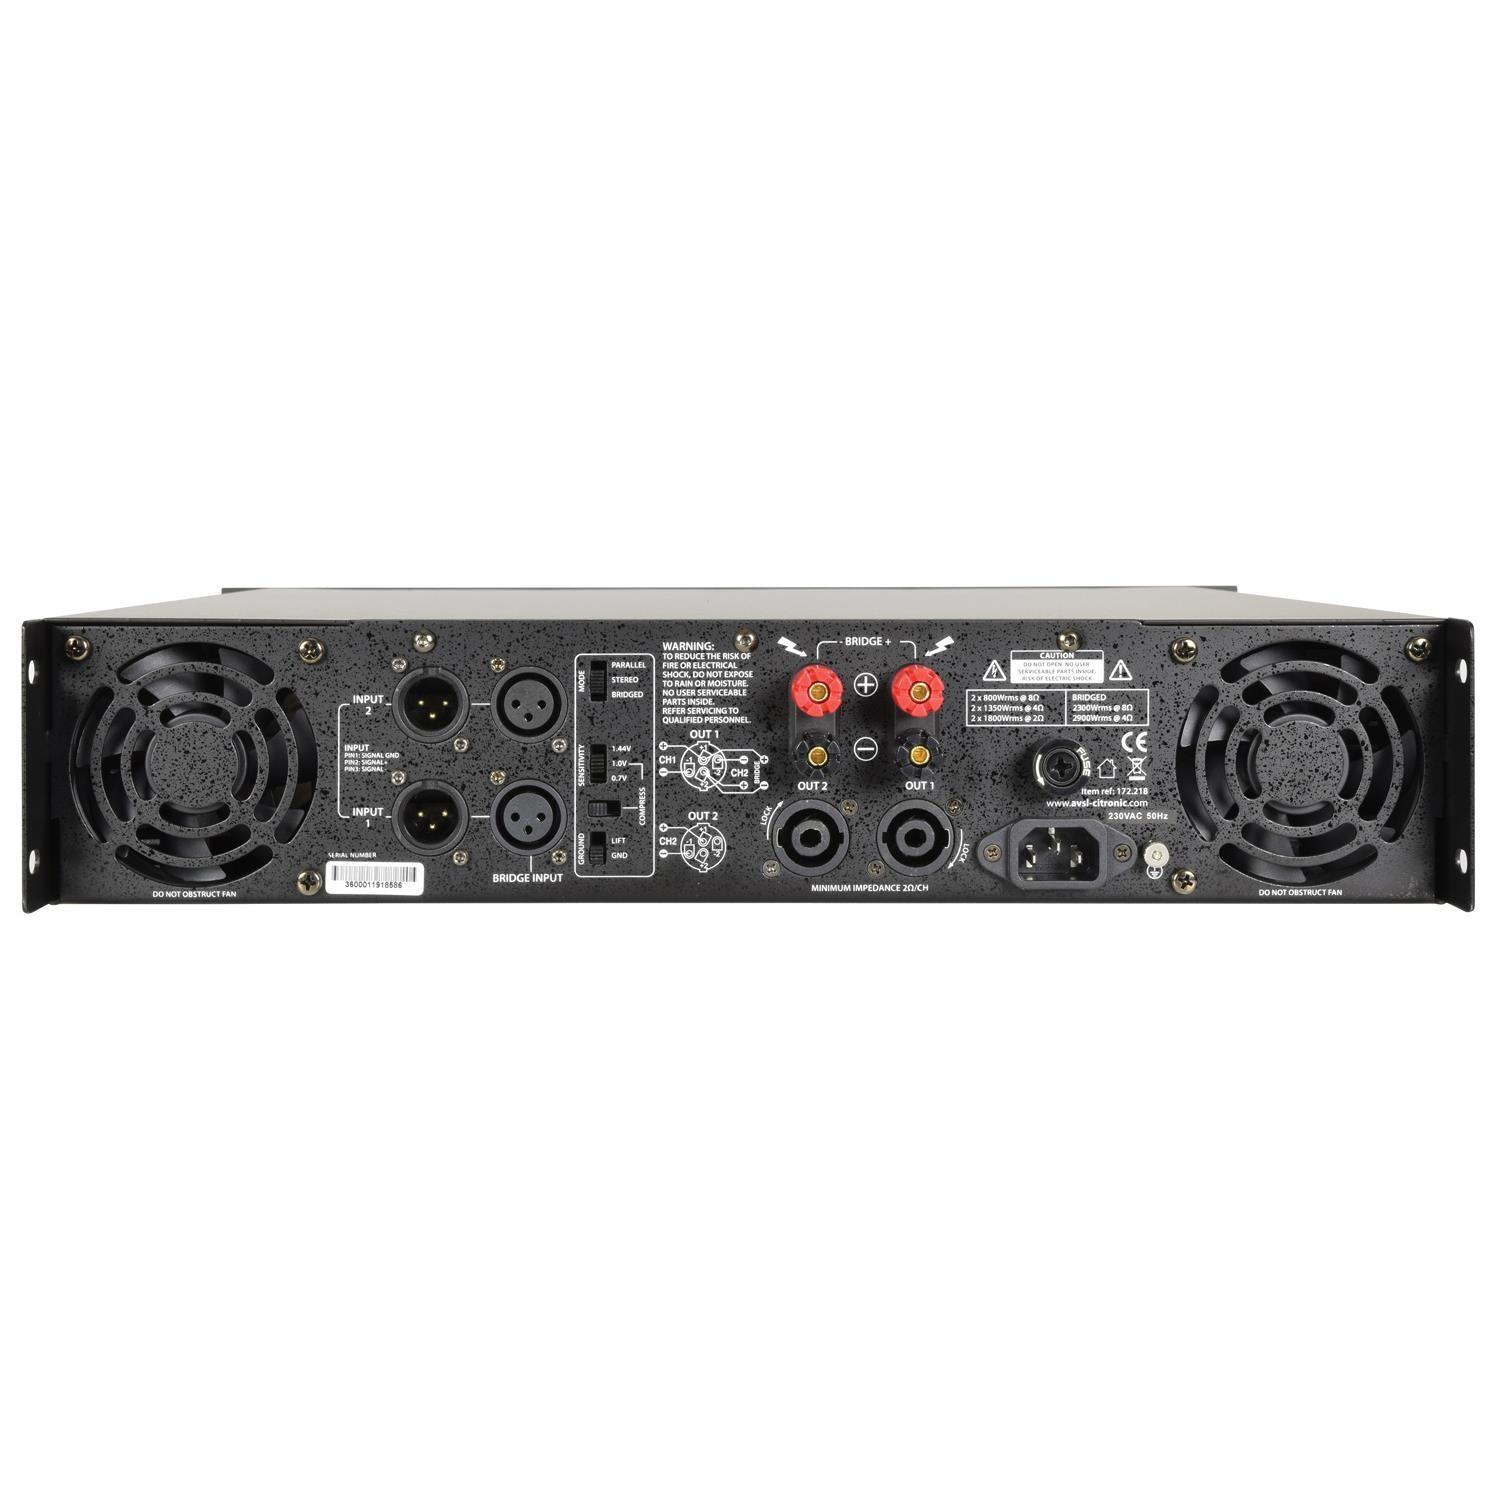 Citronic PLX3600 2 x 1350W @ 4 Ohms Power Amplifier - DY Pro Audio